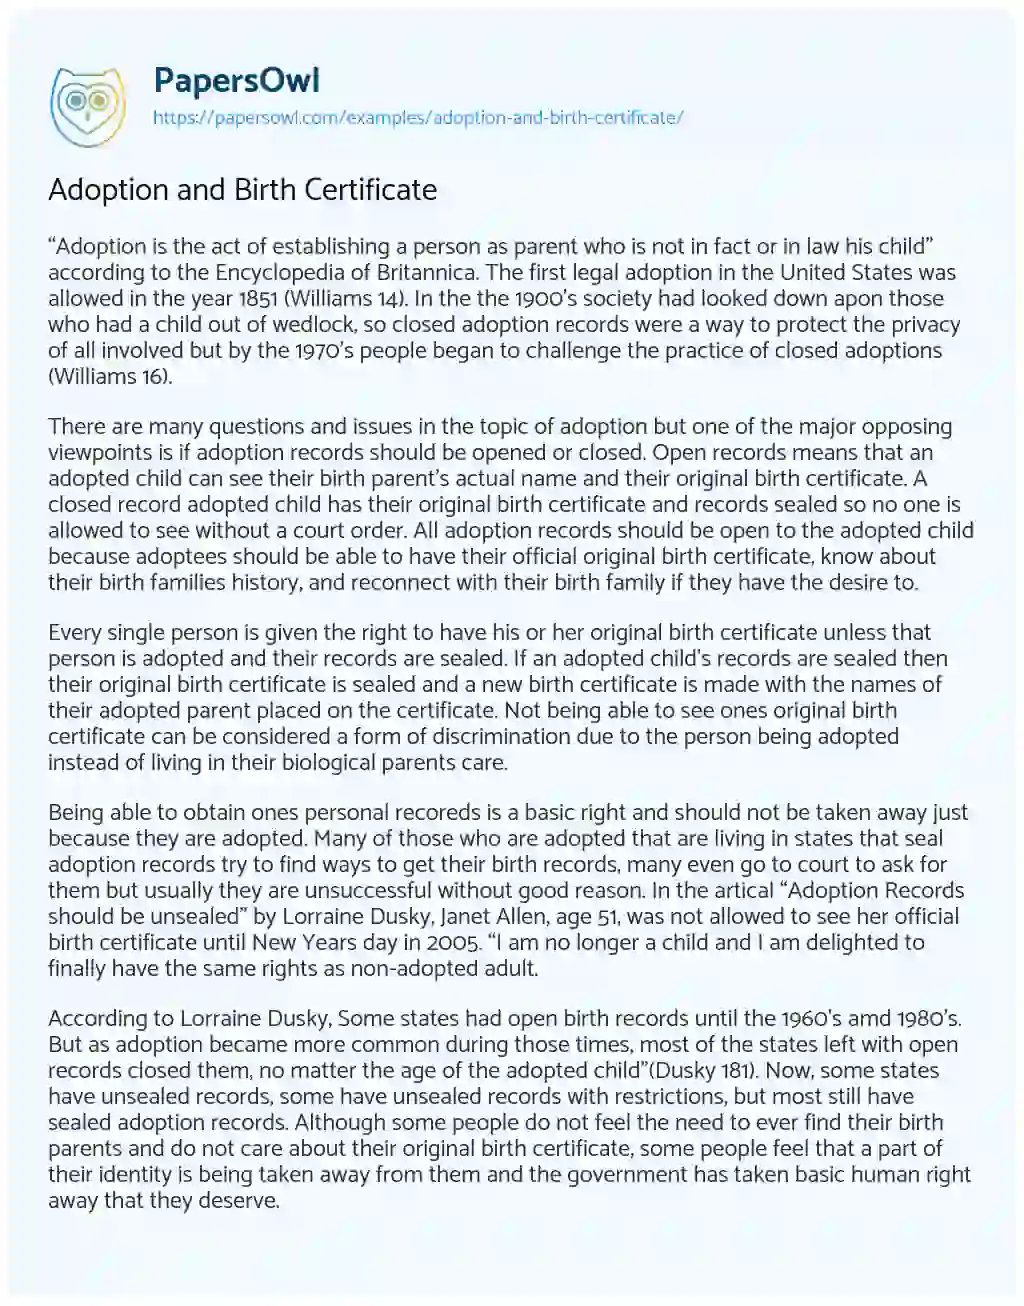 Adoption and Birth Certificate essay